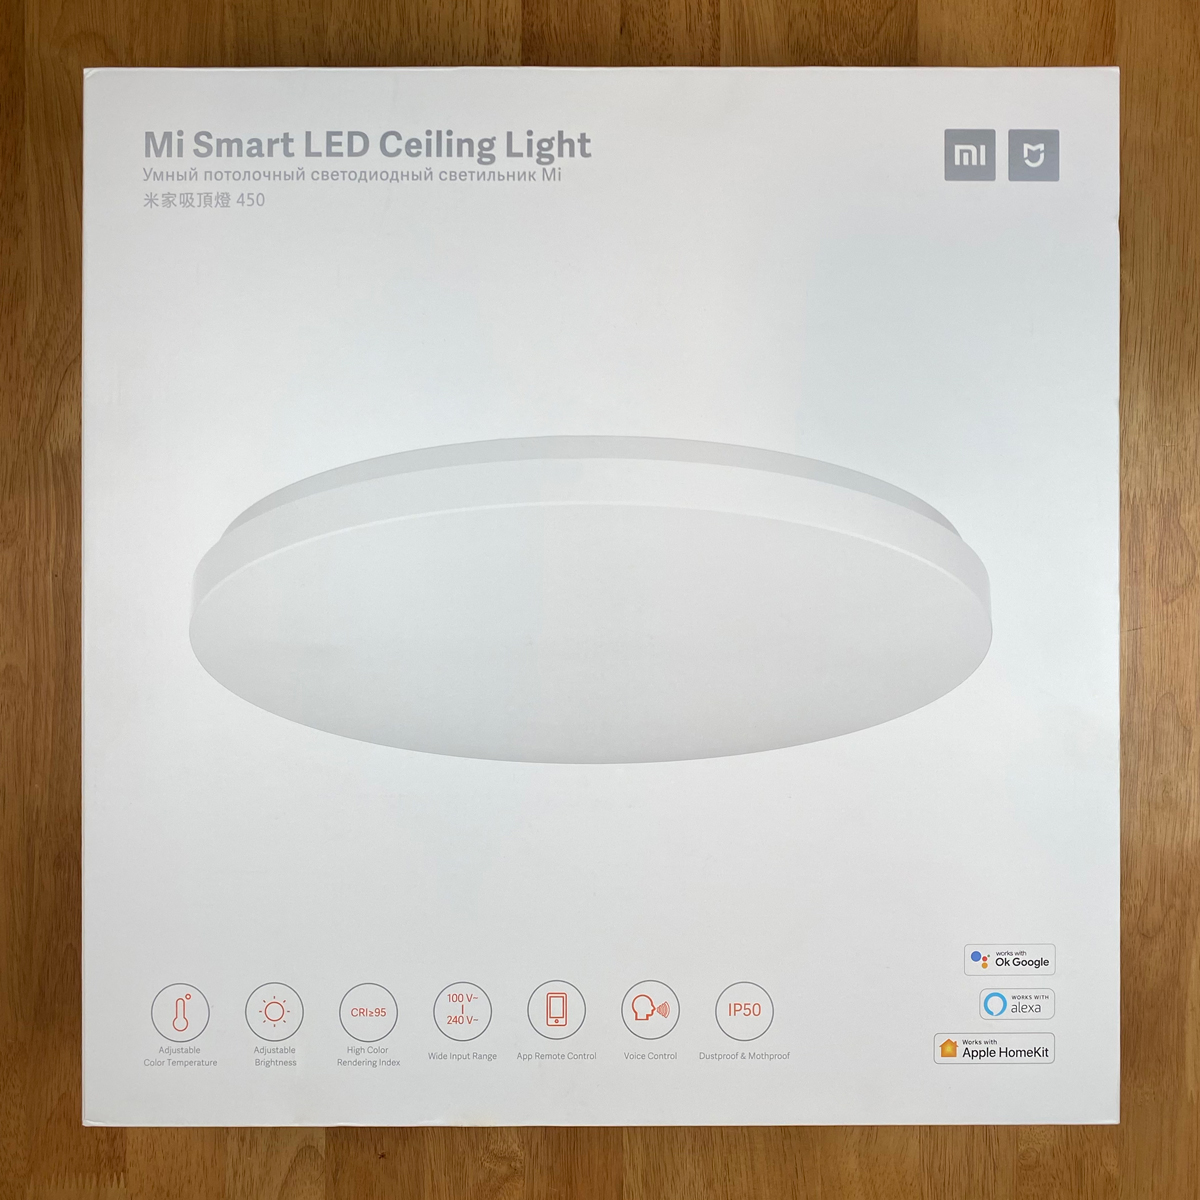 Mi Smart LED Ceiling Light 450 - Homekit and Reviews